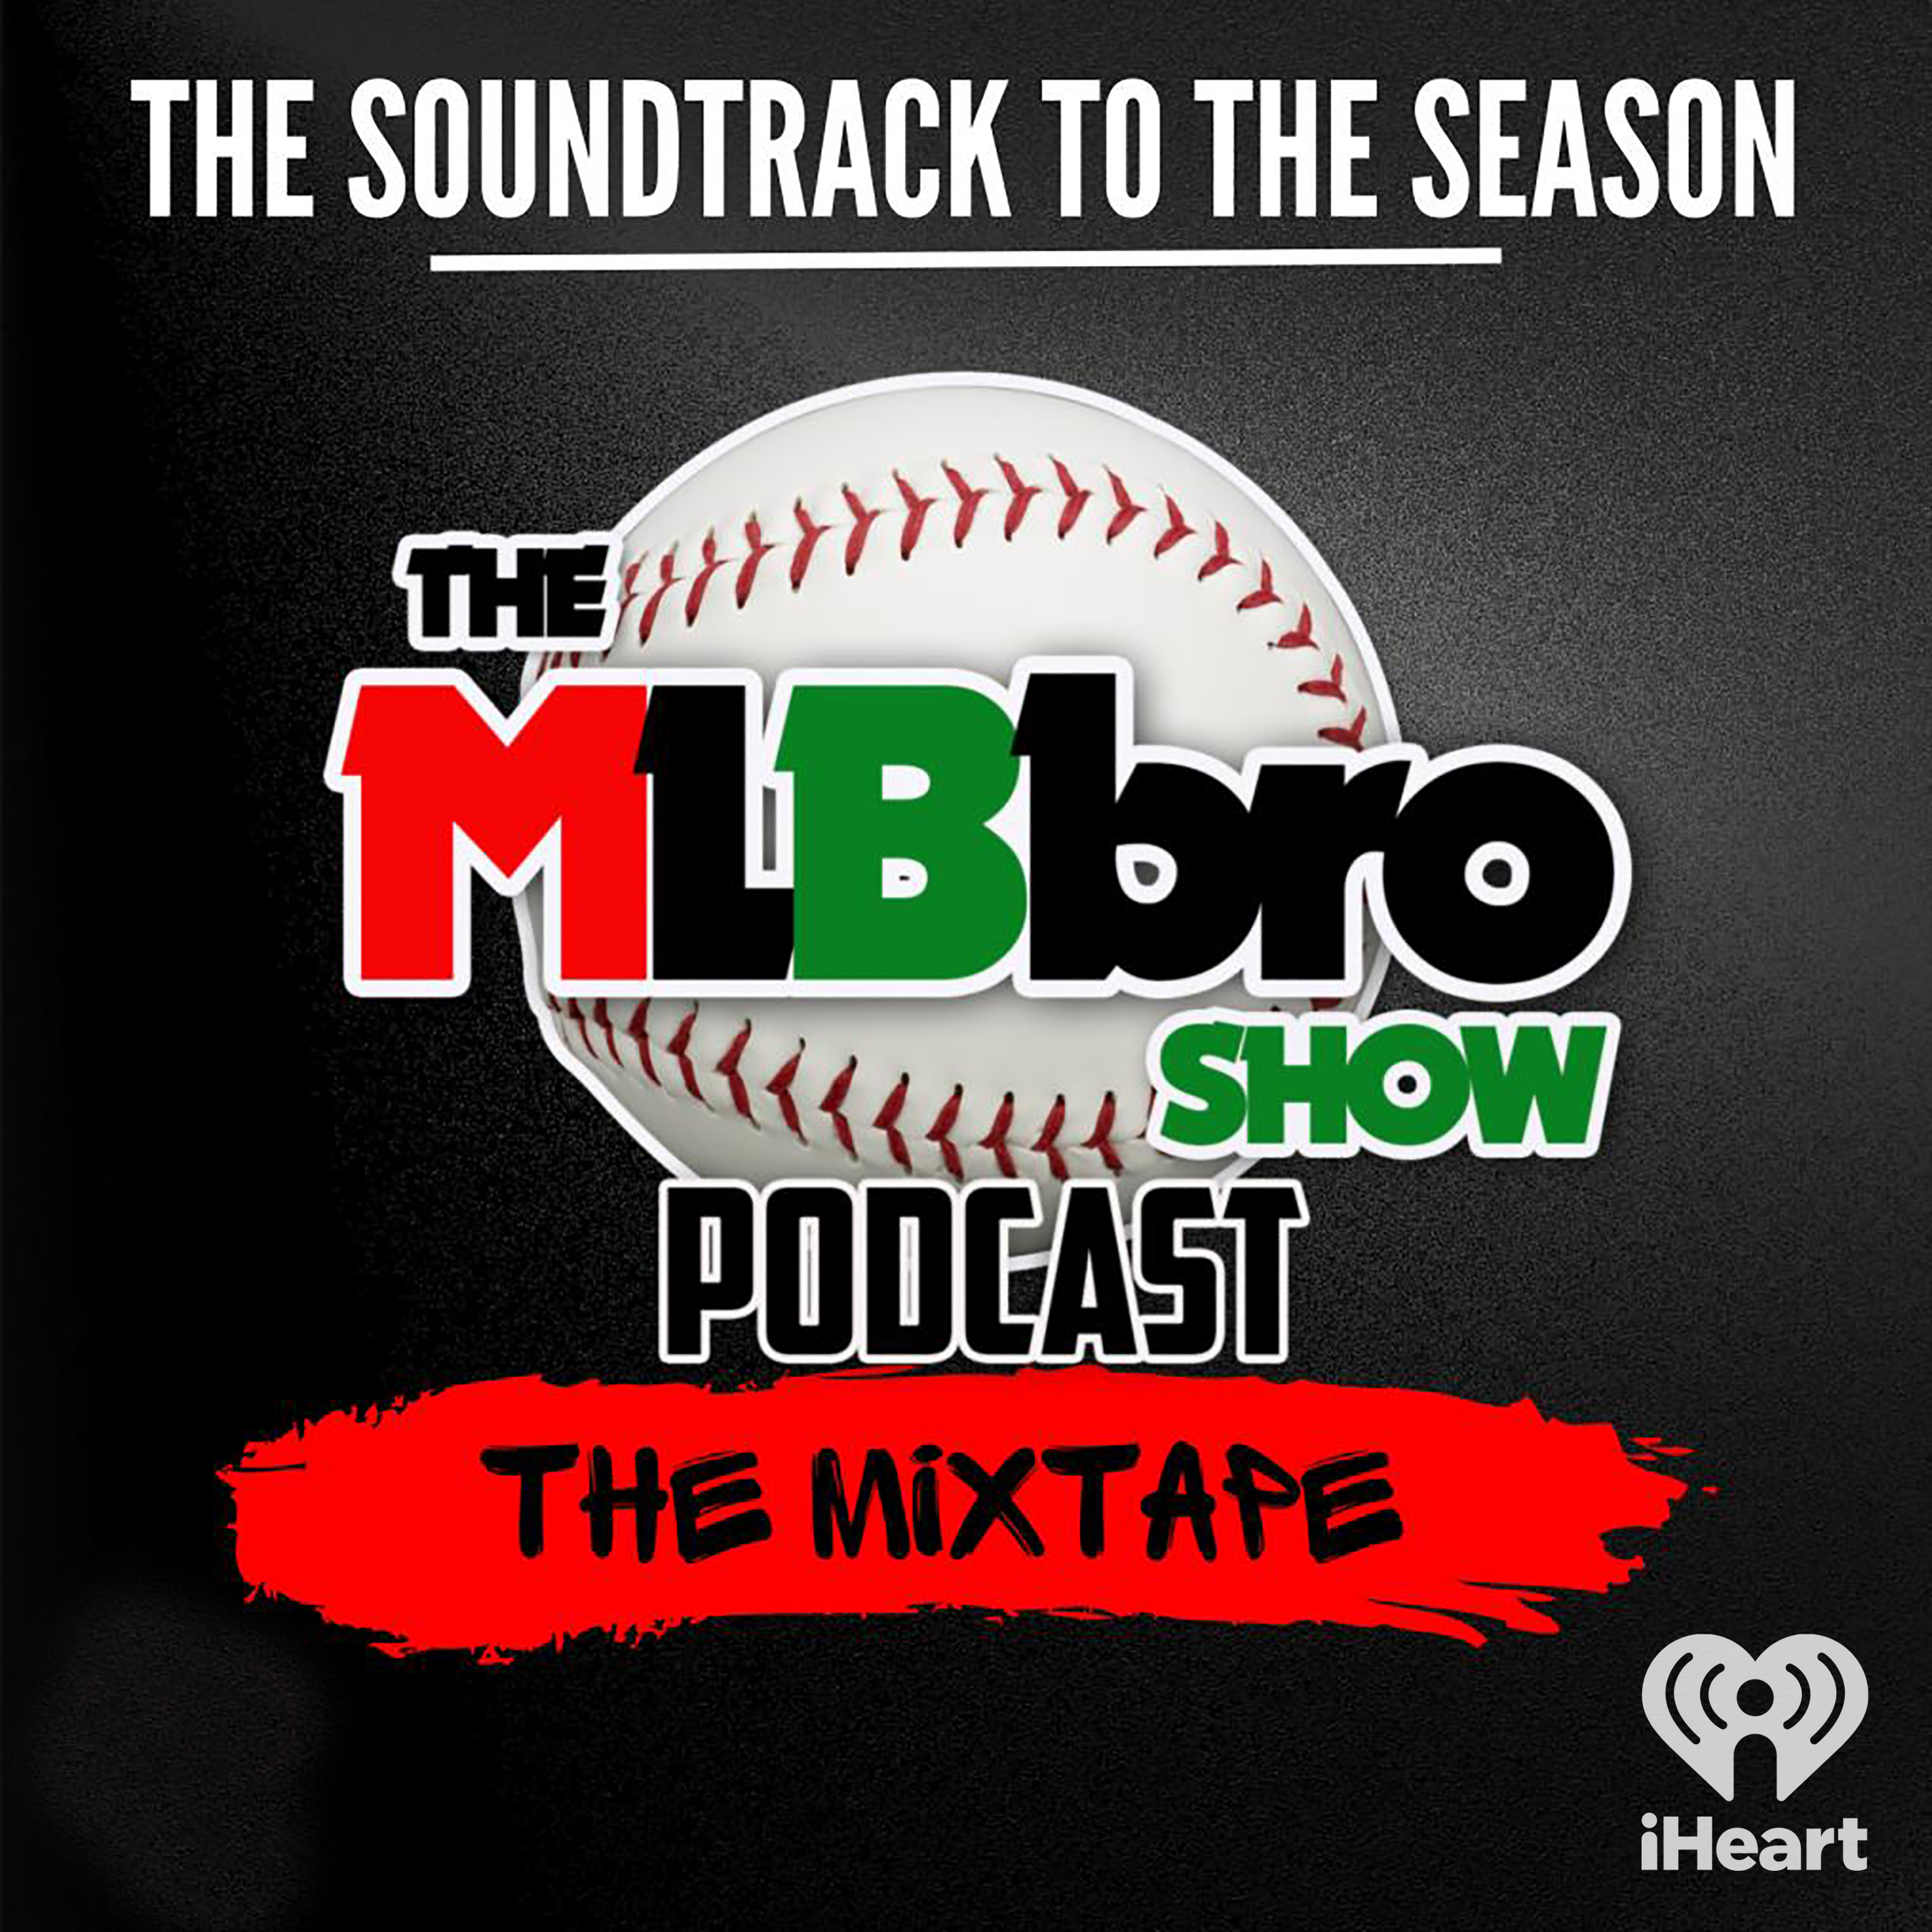 MLBbro Show Podcast The Mixtape Vol 3 Episode 21